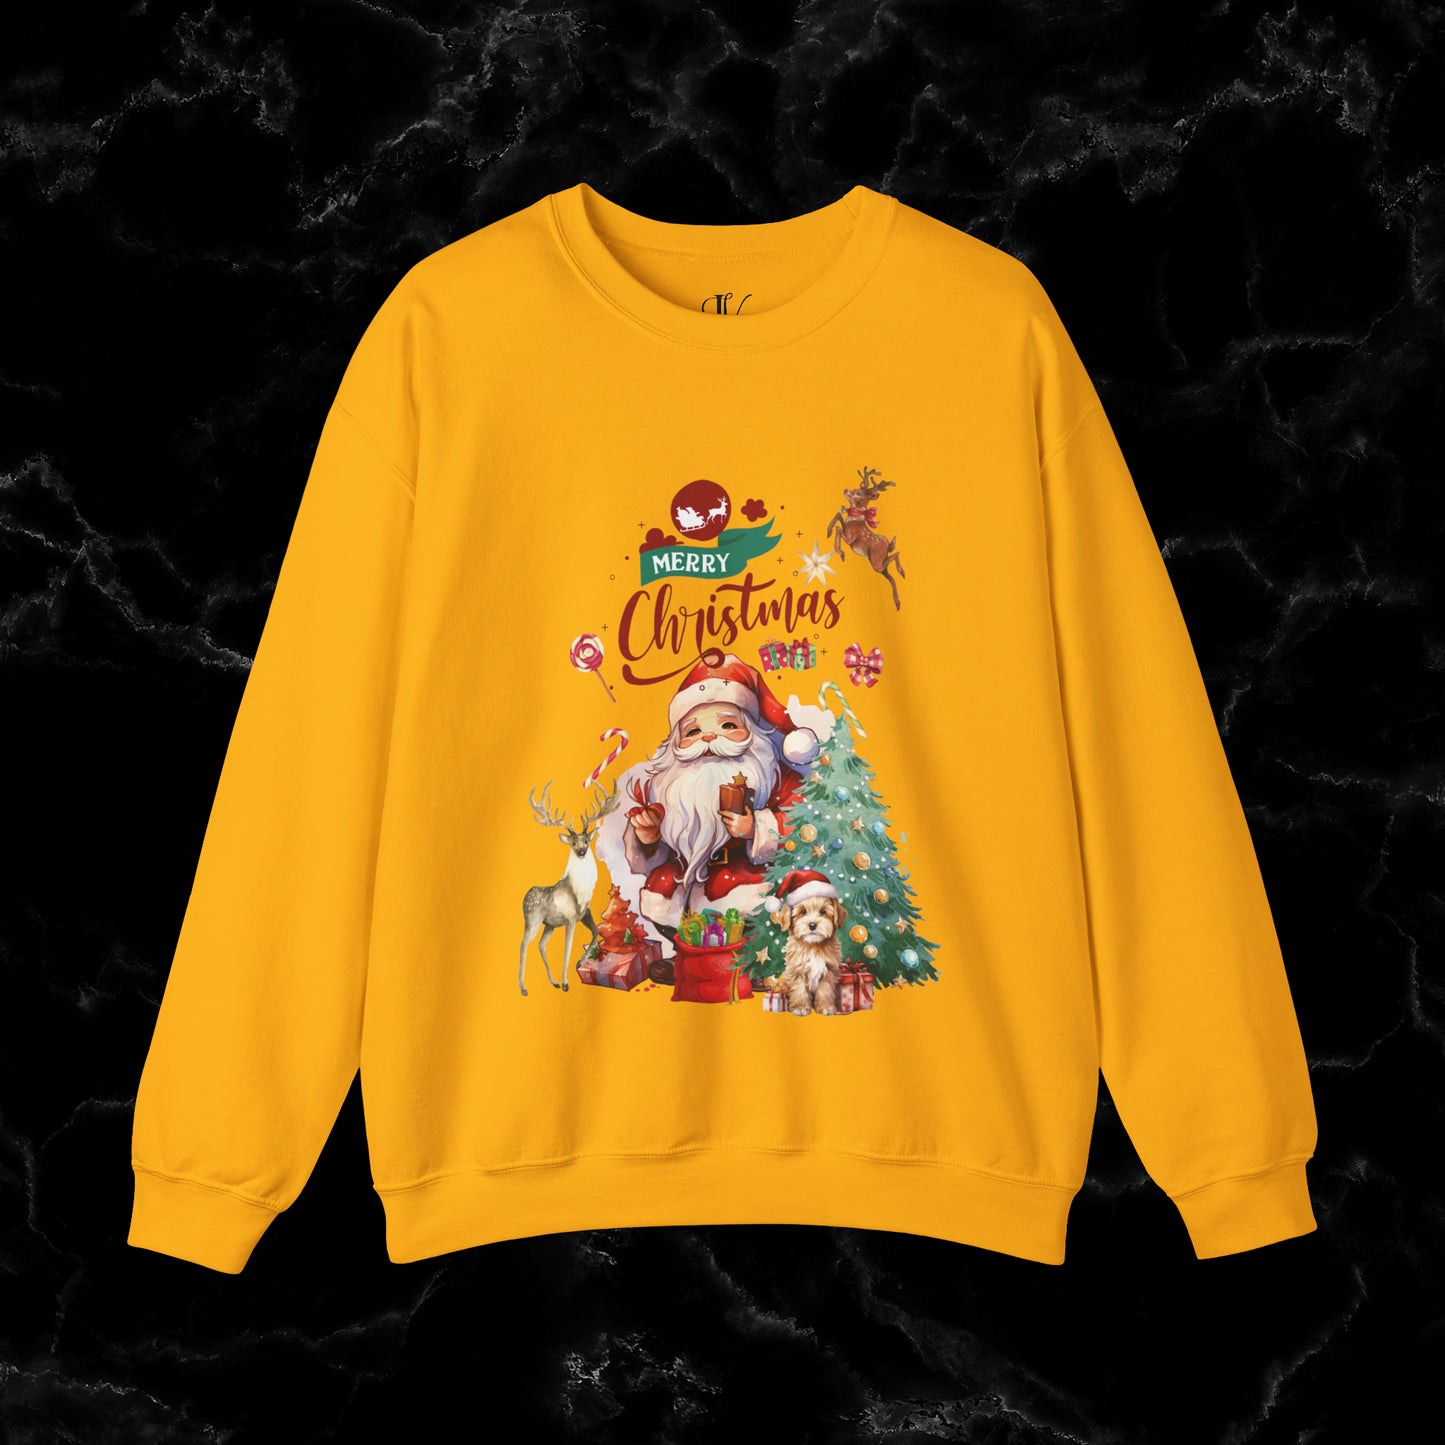 Merry Christmas Sweatshirt | Christmas Shirt - Matching Christmas Shirt - Santa Claus Merry Christmas Sweatshirt - Holiday Gift - Christmas Gift Sweatshirt S Gold 